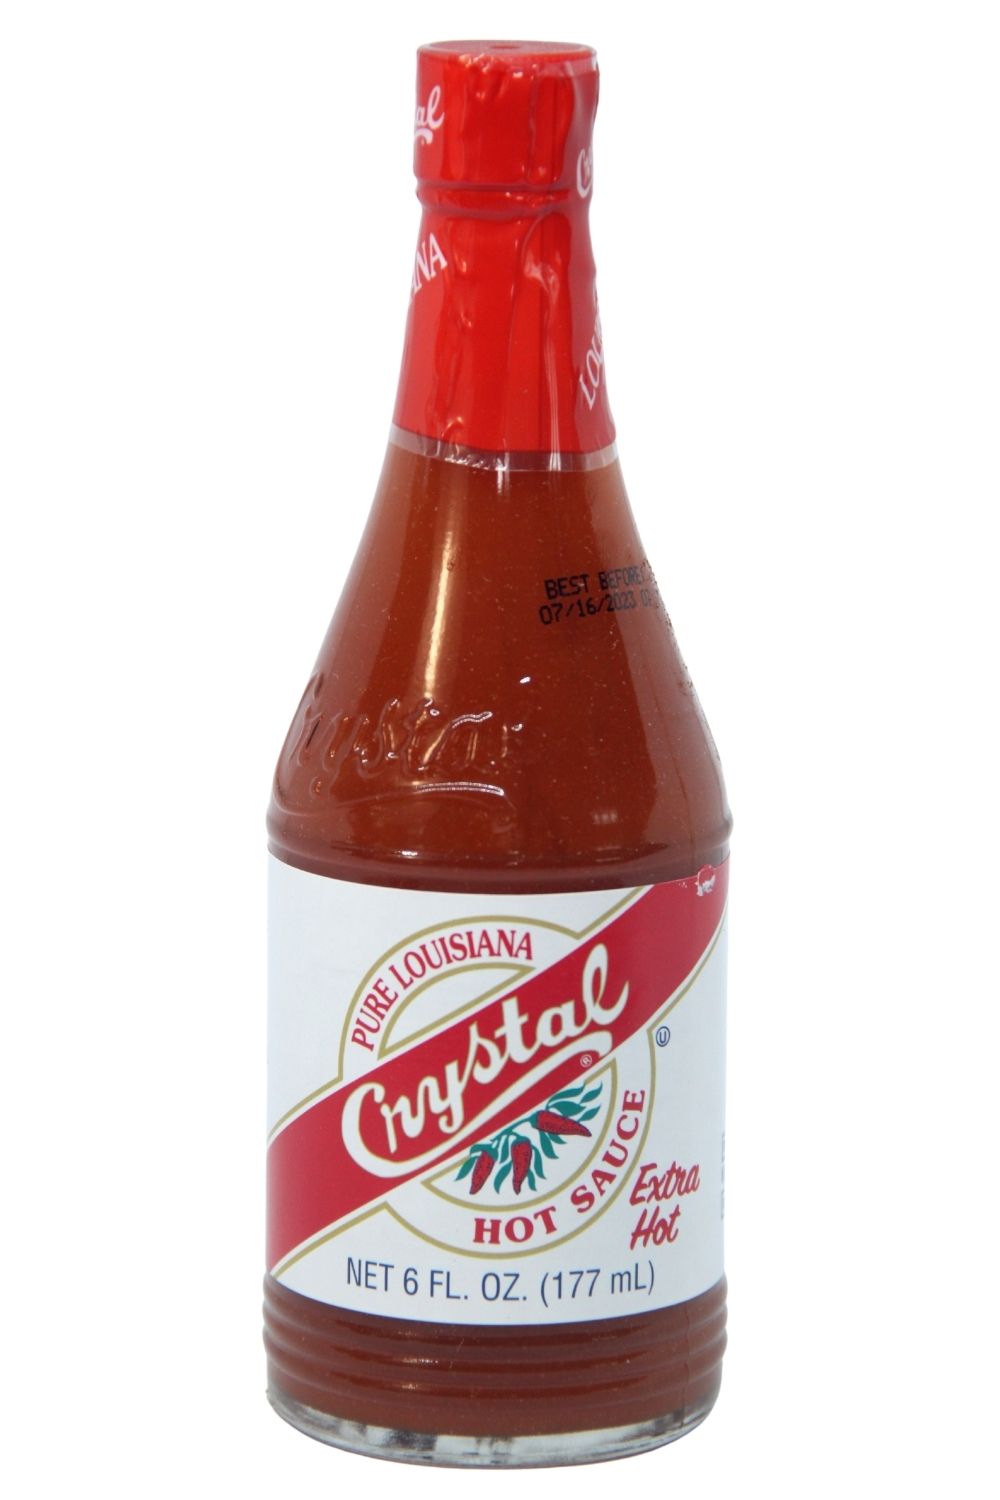 Crystal Extra Hot Louisiana Hot Sauce 177ml (Best by 27 October